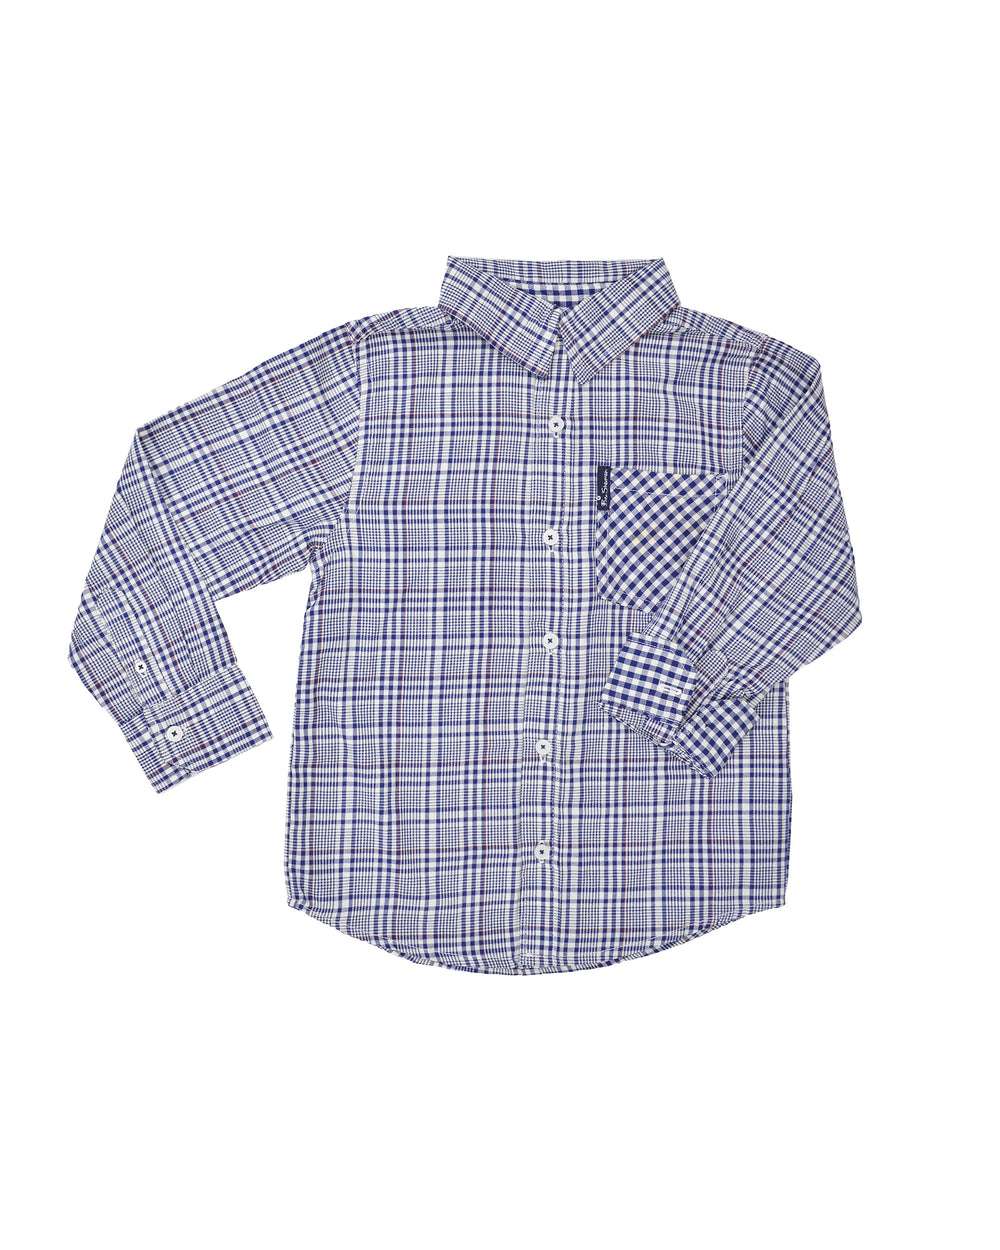 Boys' Blue Plaid & Gingham Yarn Dyed Shirt (Sizes 4-7) - Ben Sherman